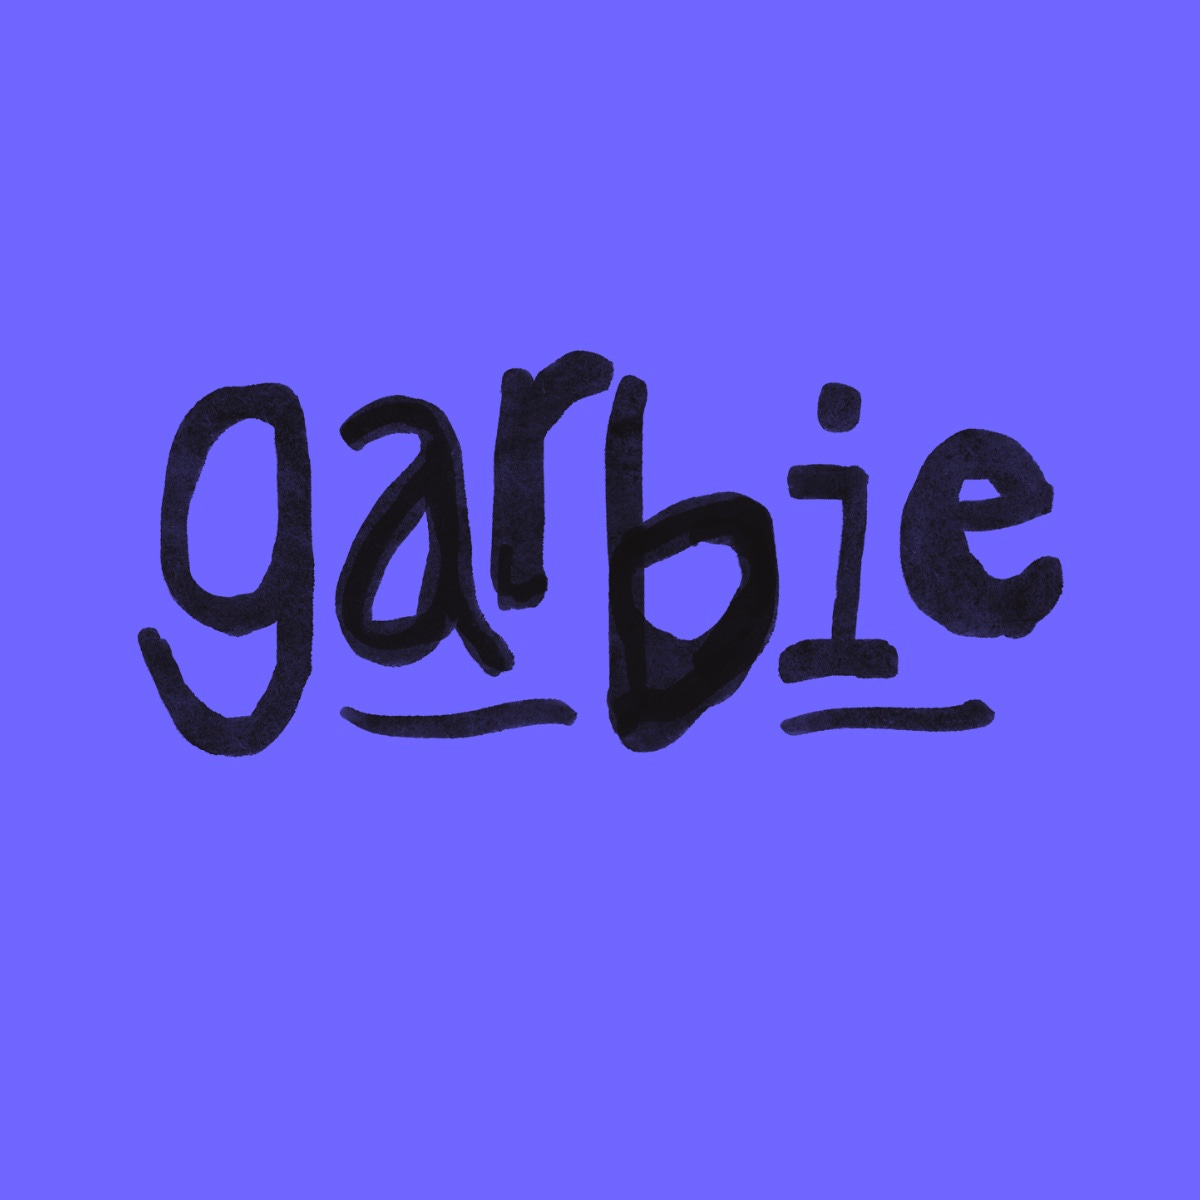 Artwork for Garbie